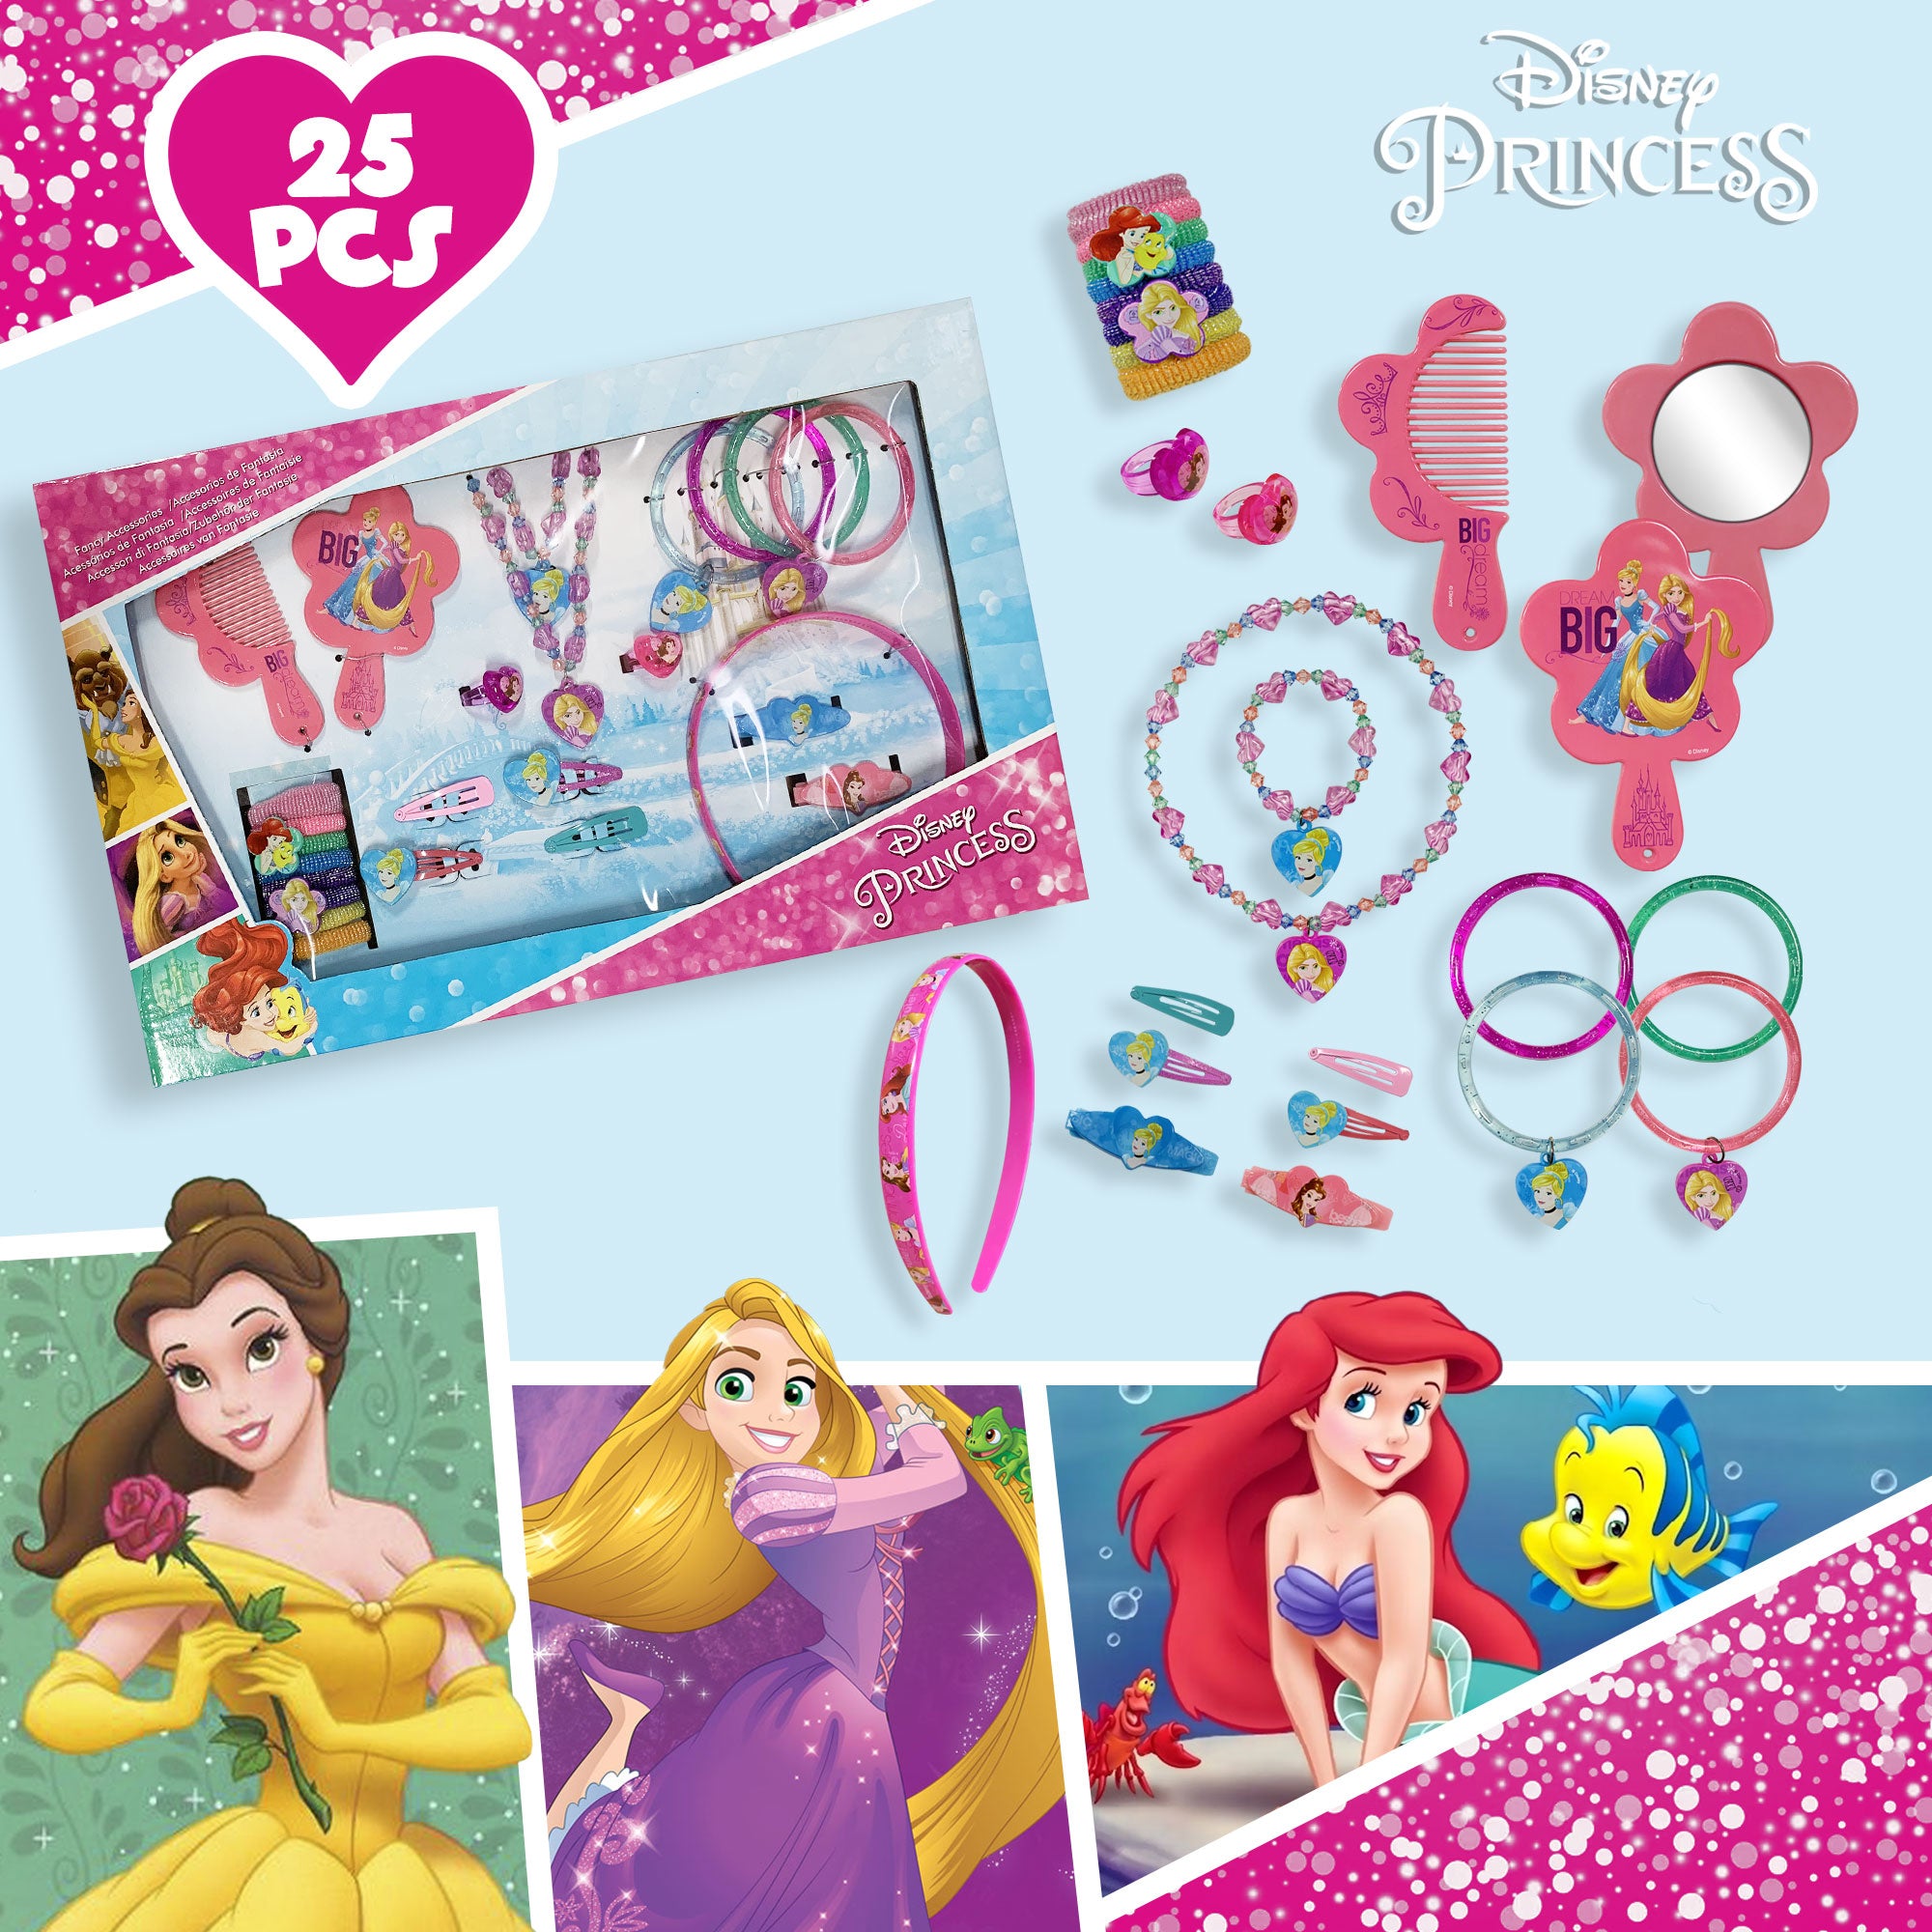 Kit accessori Disney Principesse set 25 pz  per capelli e vari 2706